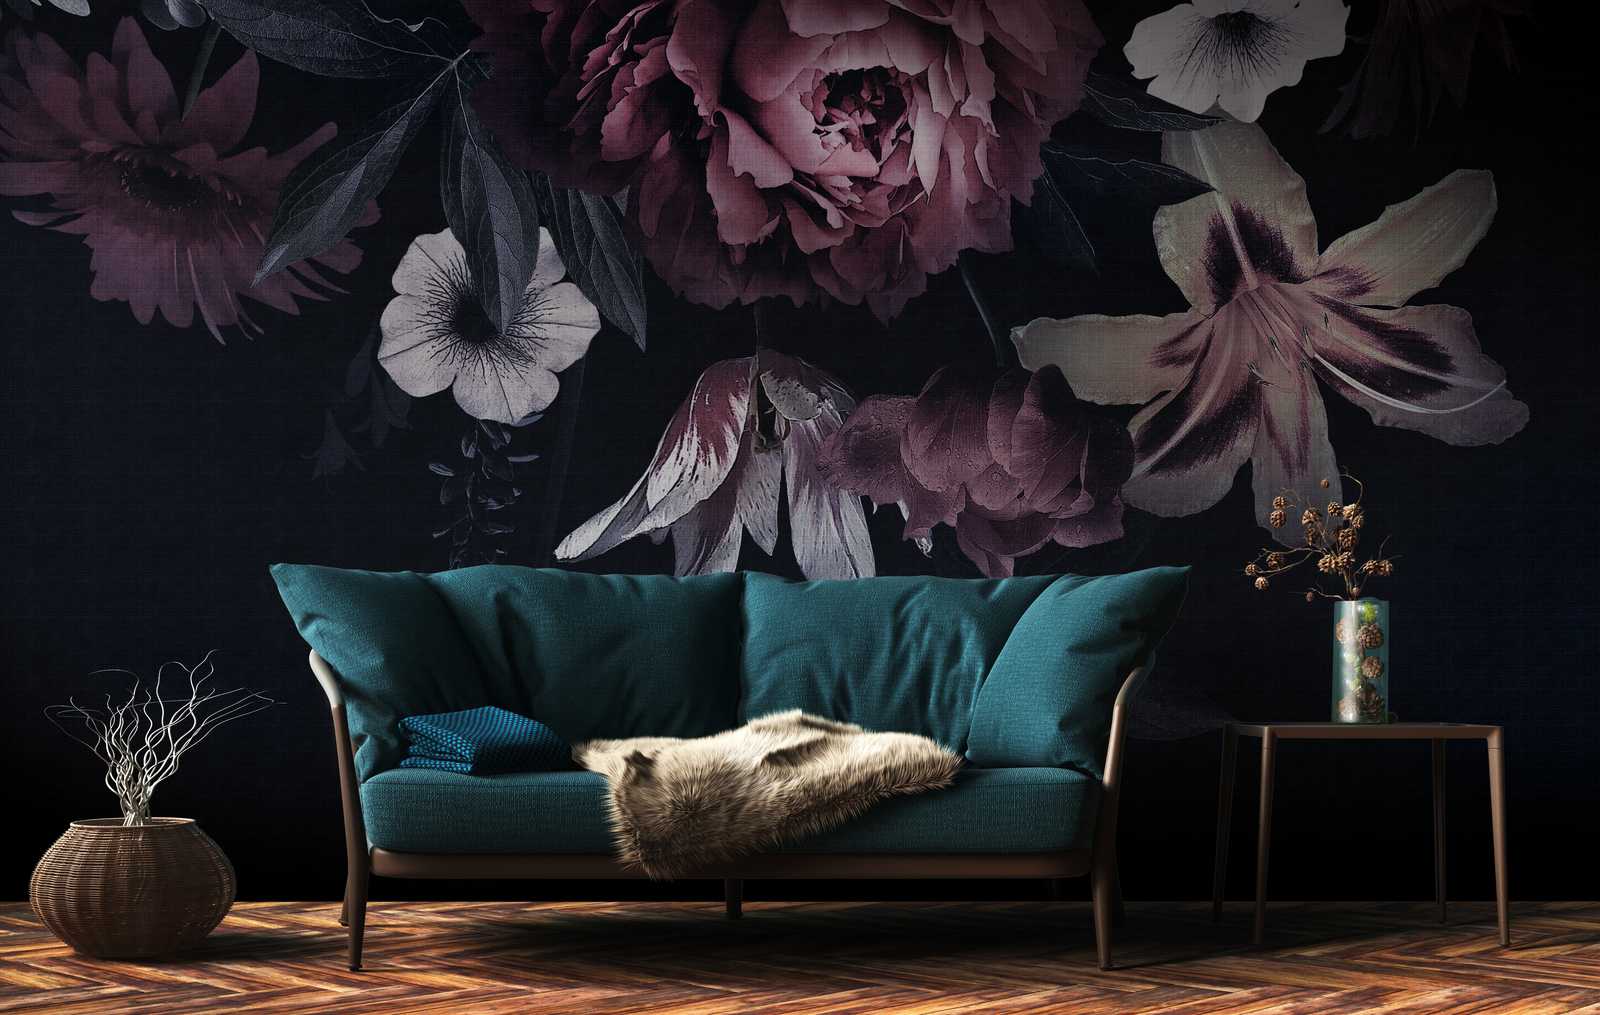             Wallpaper novelty | dark motif wallpaper flowers in painting style
        